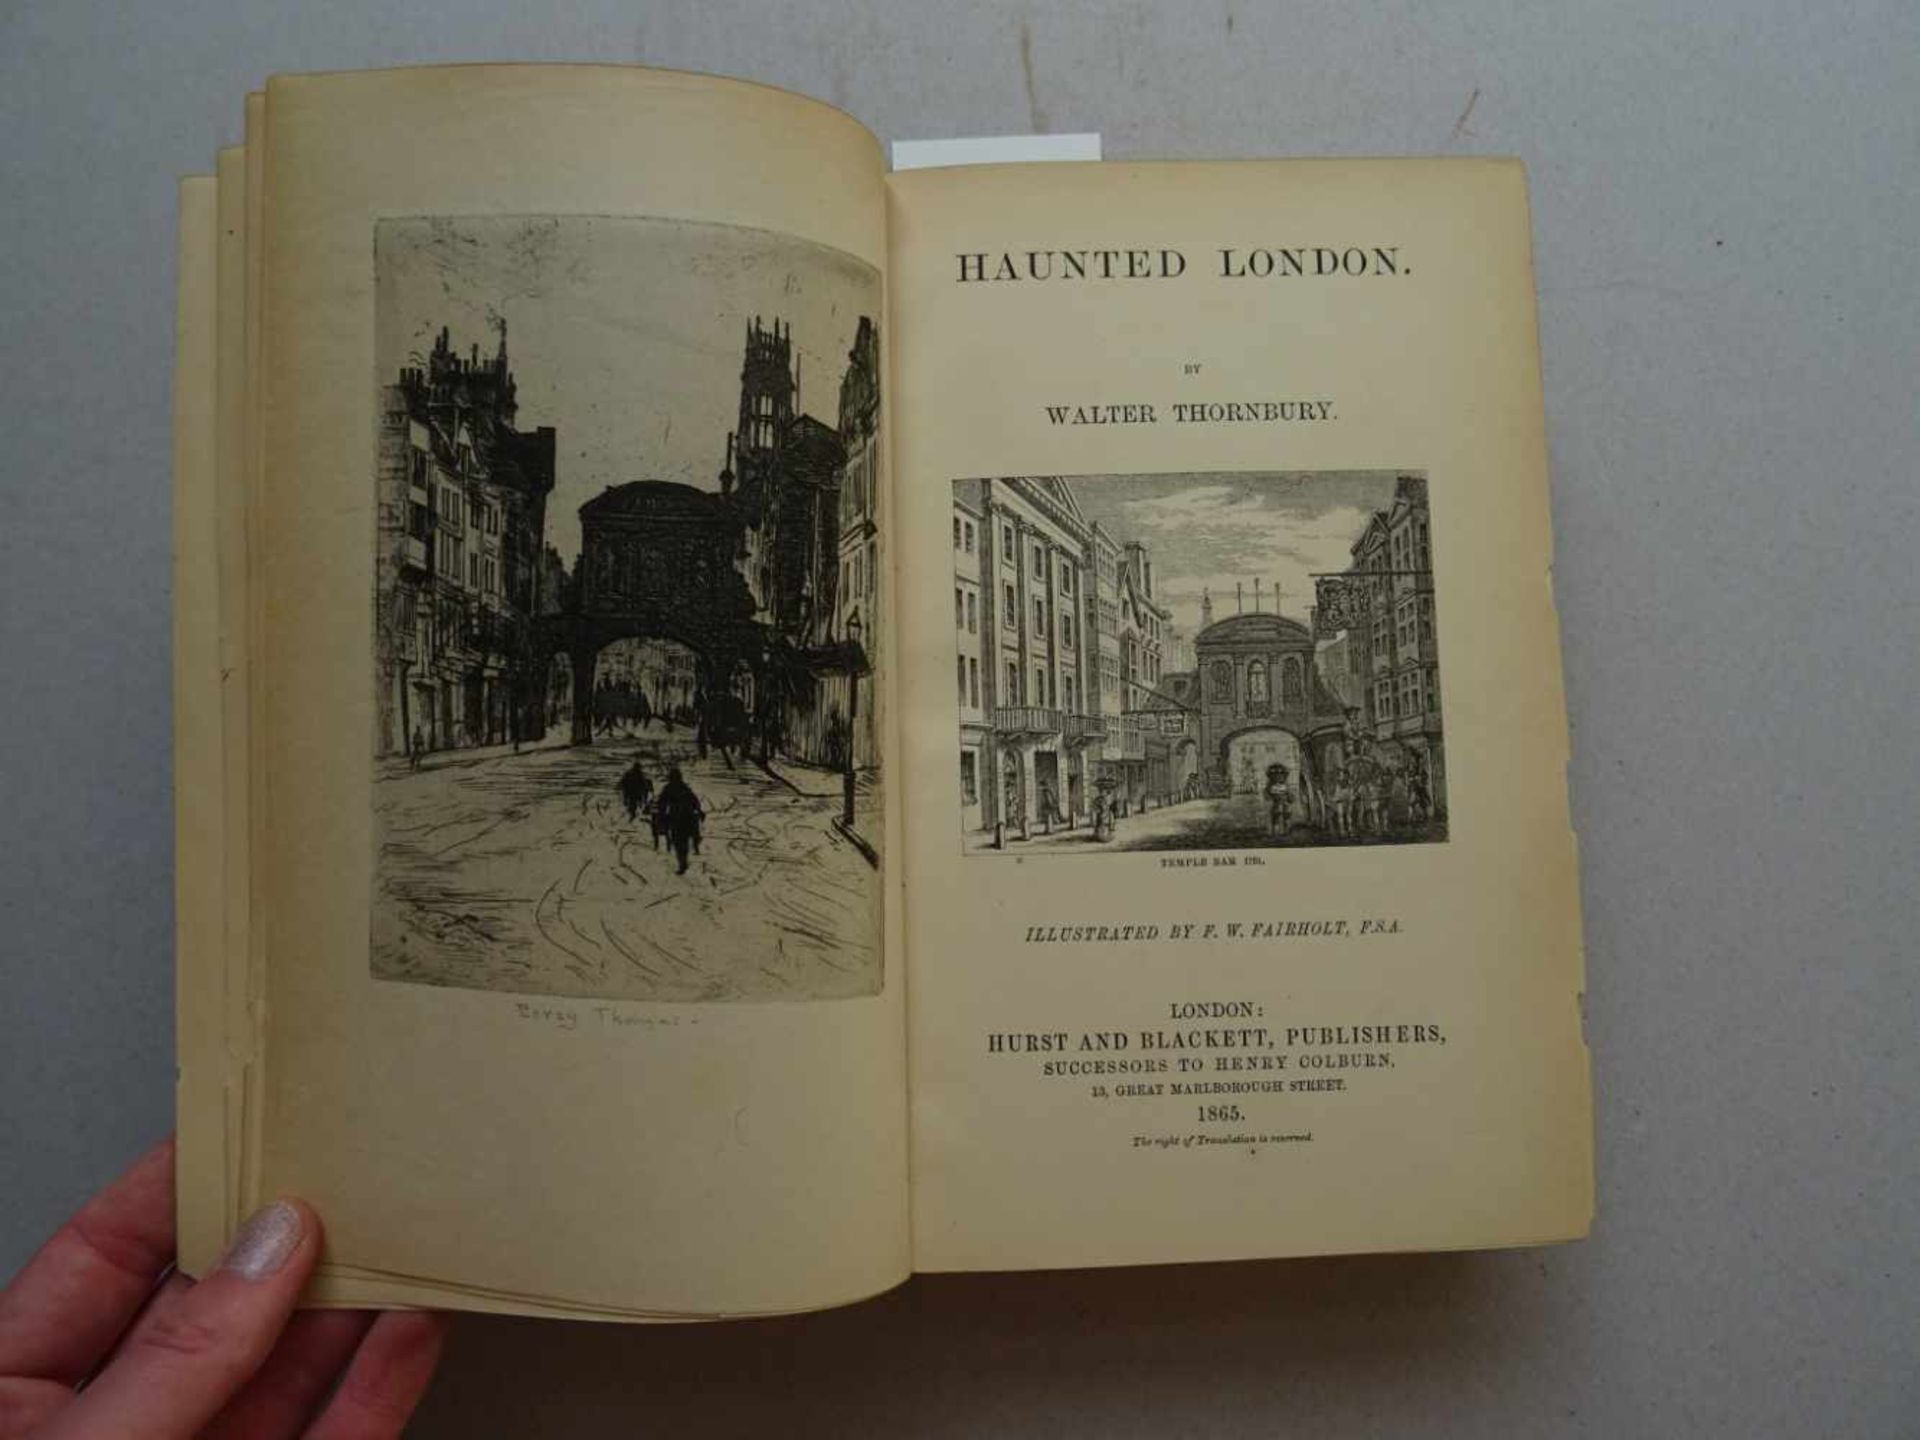 Großbritannien.- Thornbury, W.Haunted London. Illustrated by F.W. Fairholt. London, Hurst and